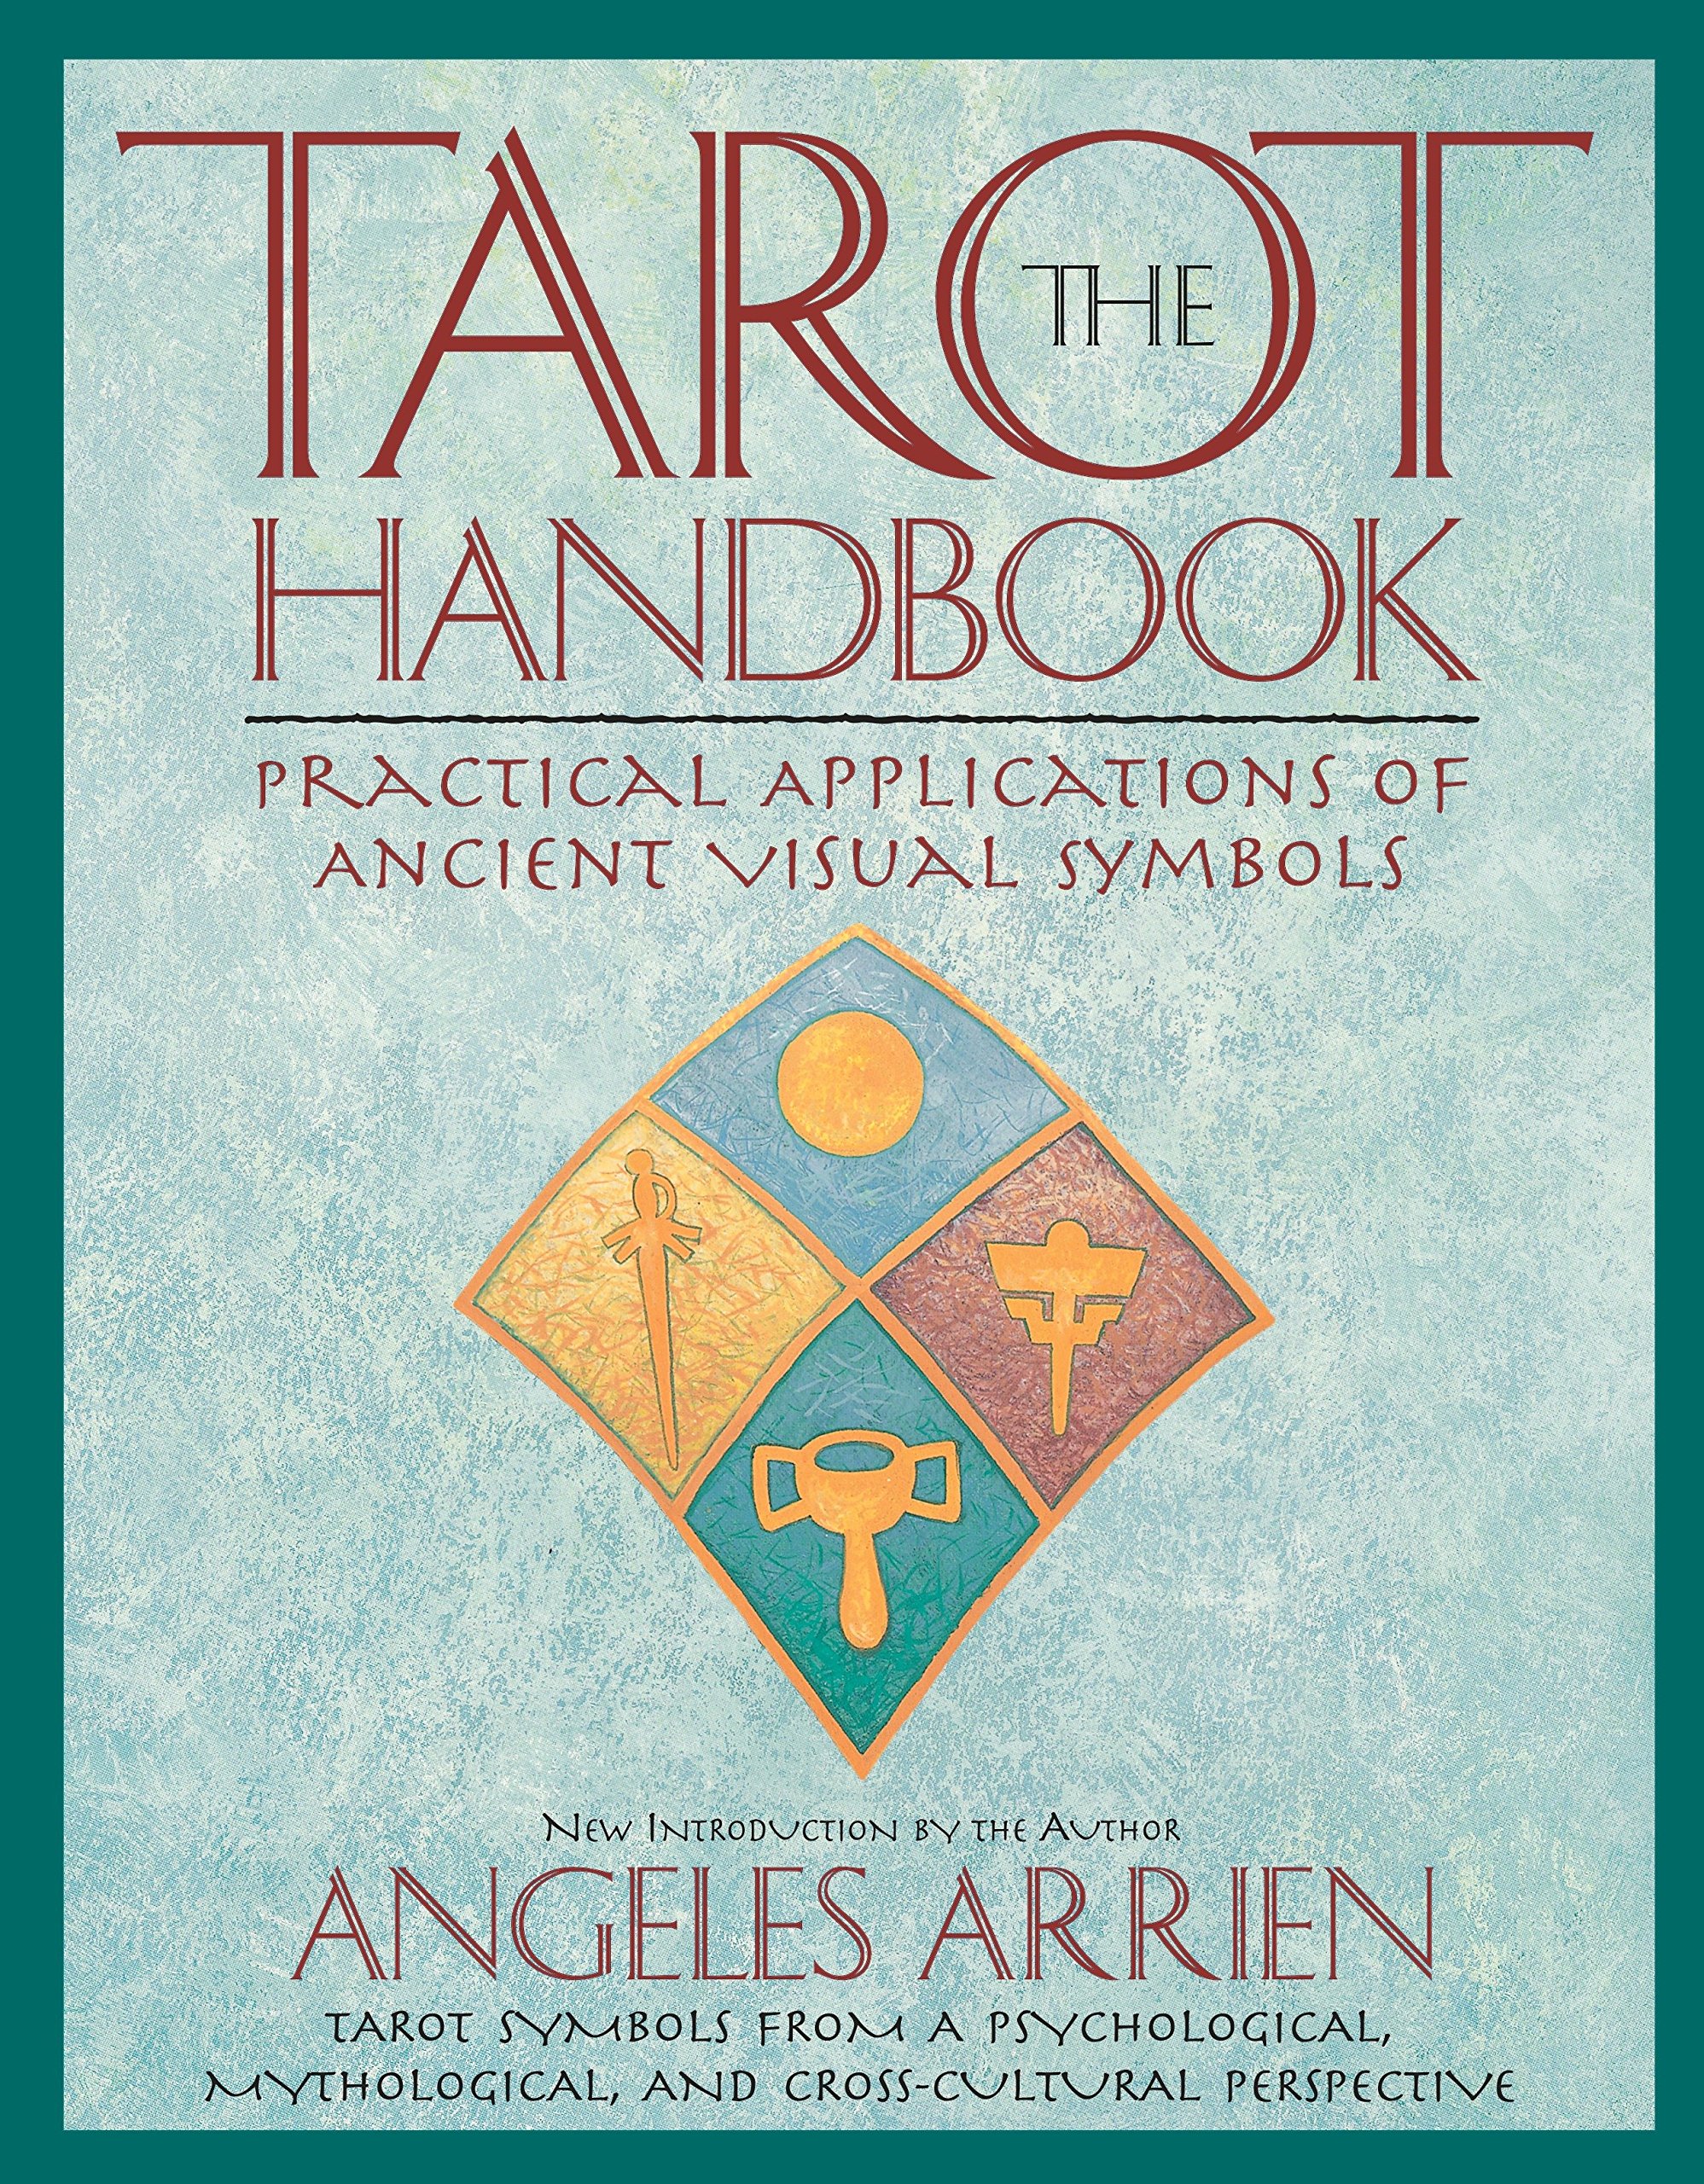 The Tarot Handbook: Practical Applications of Ancient Visual Symbols | Angeles Arrien